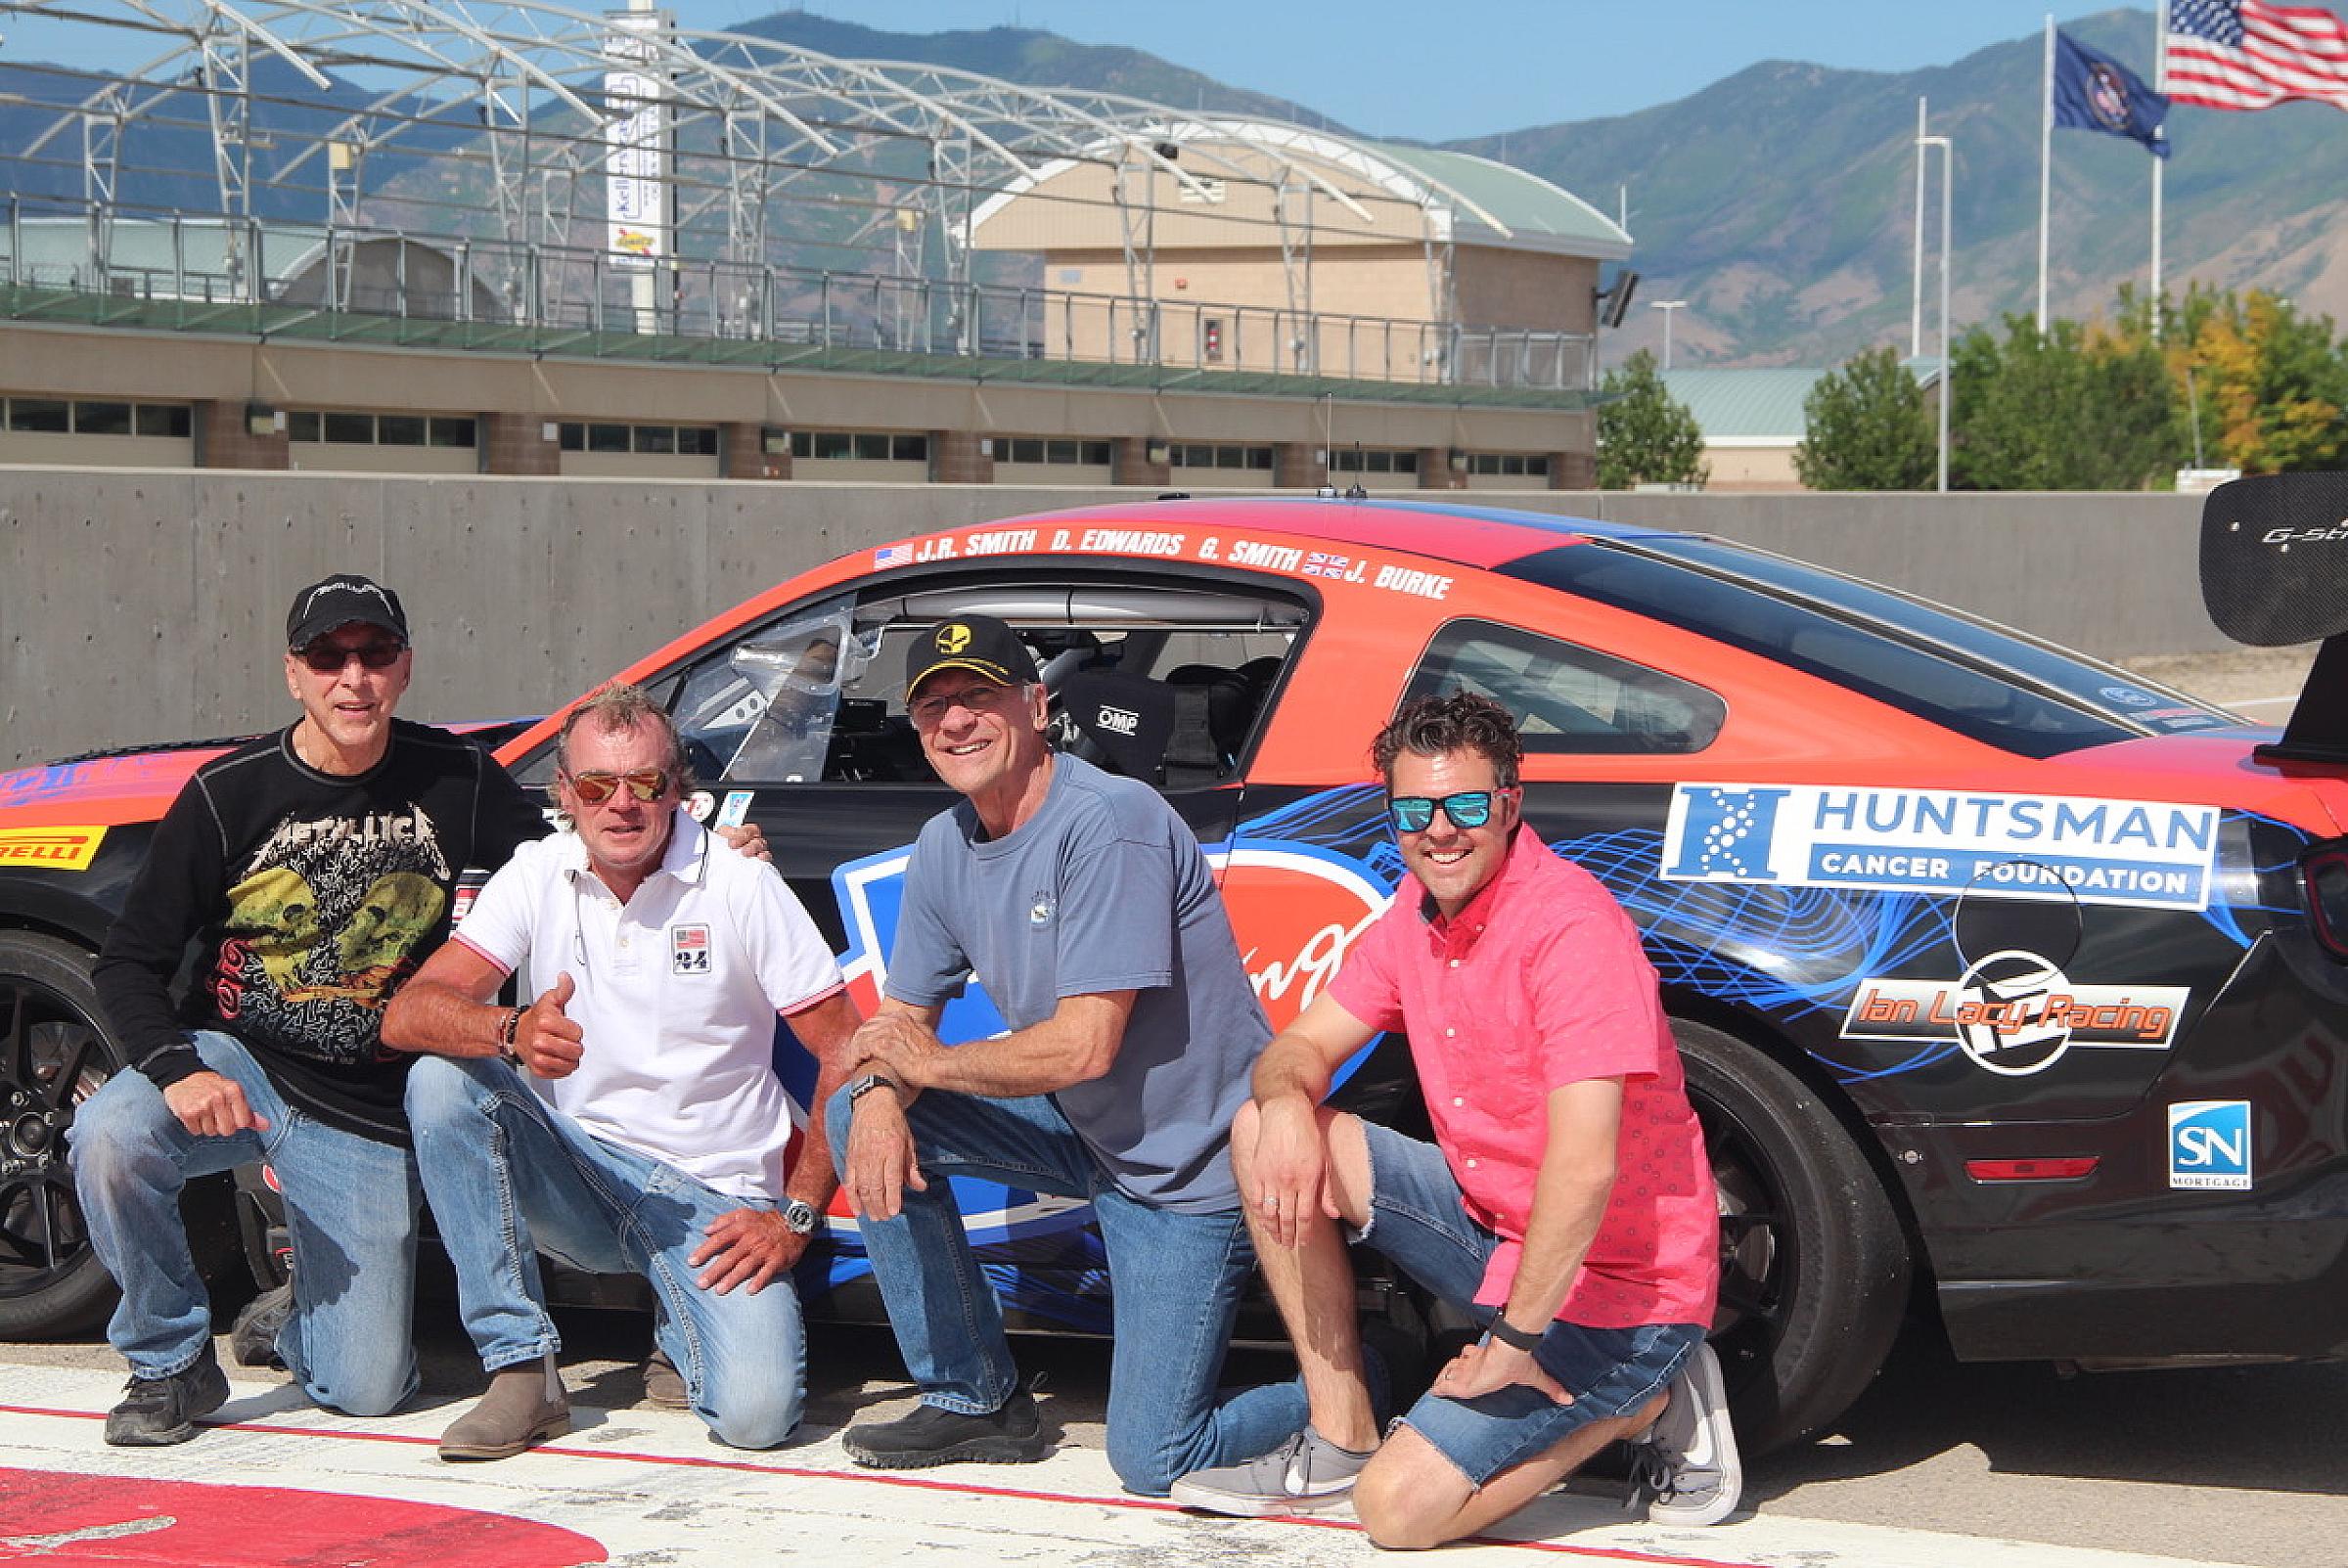 Four men kneeling next to a race car